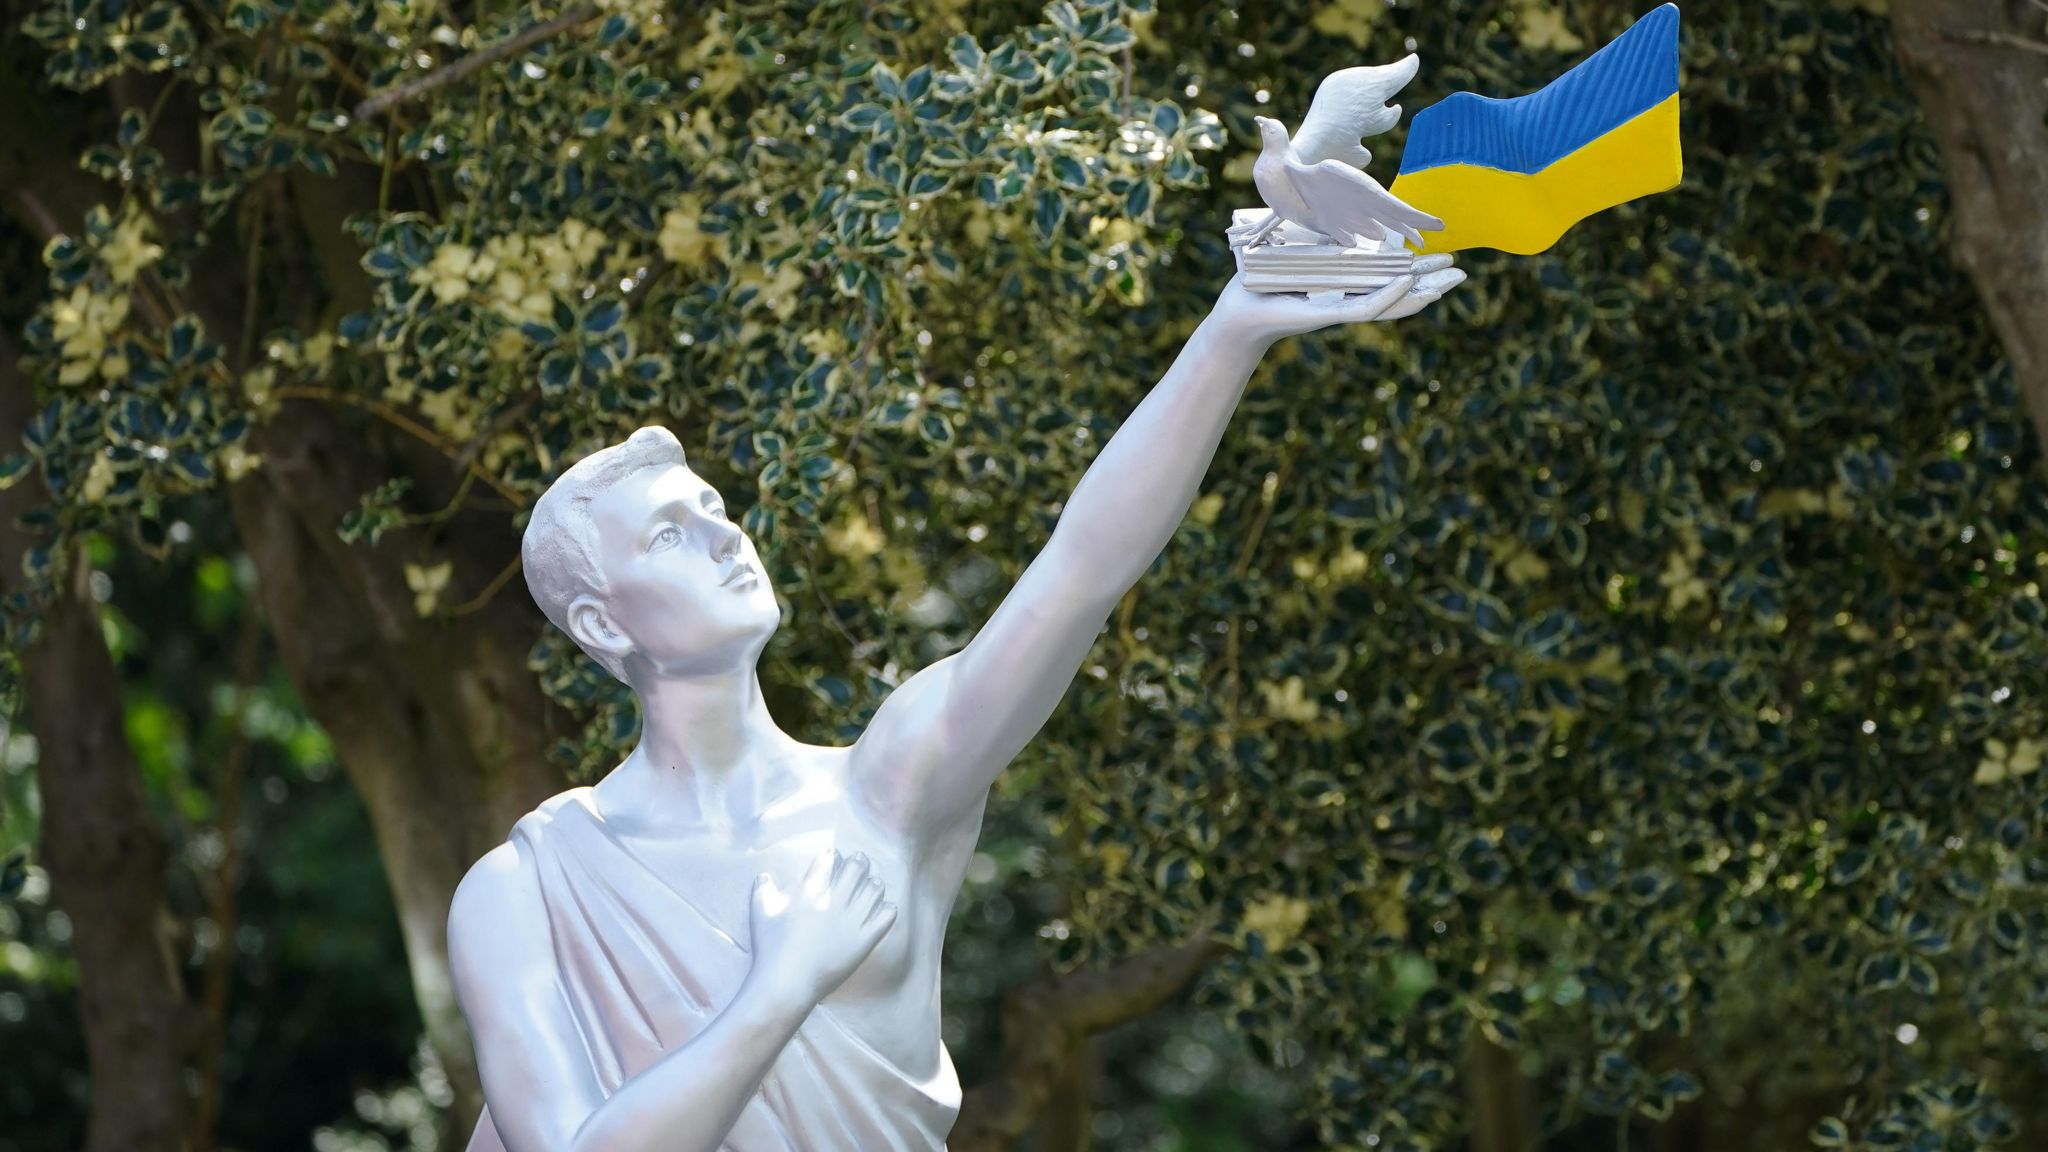 Eurovision Ukraine peace statue unveiled in Liverpool